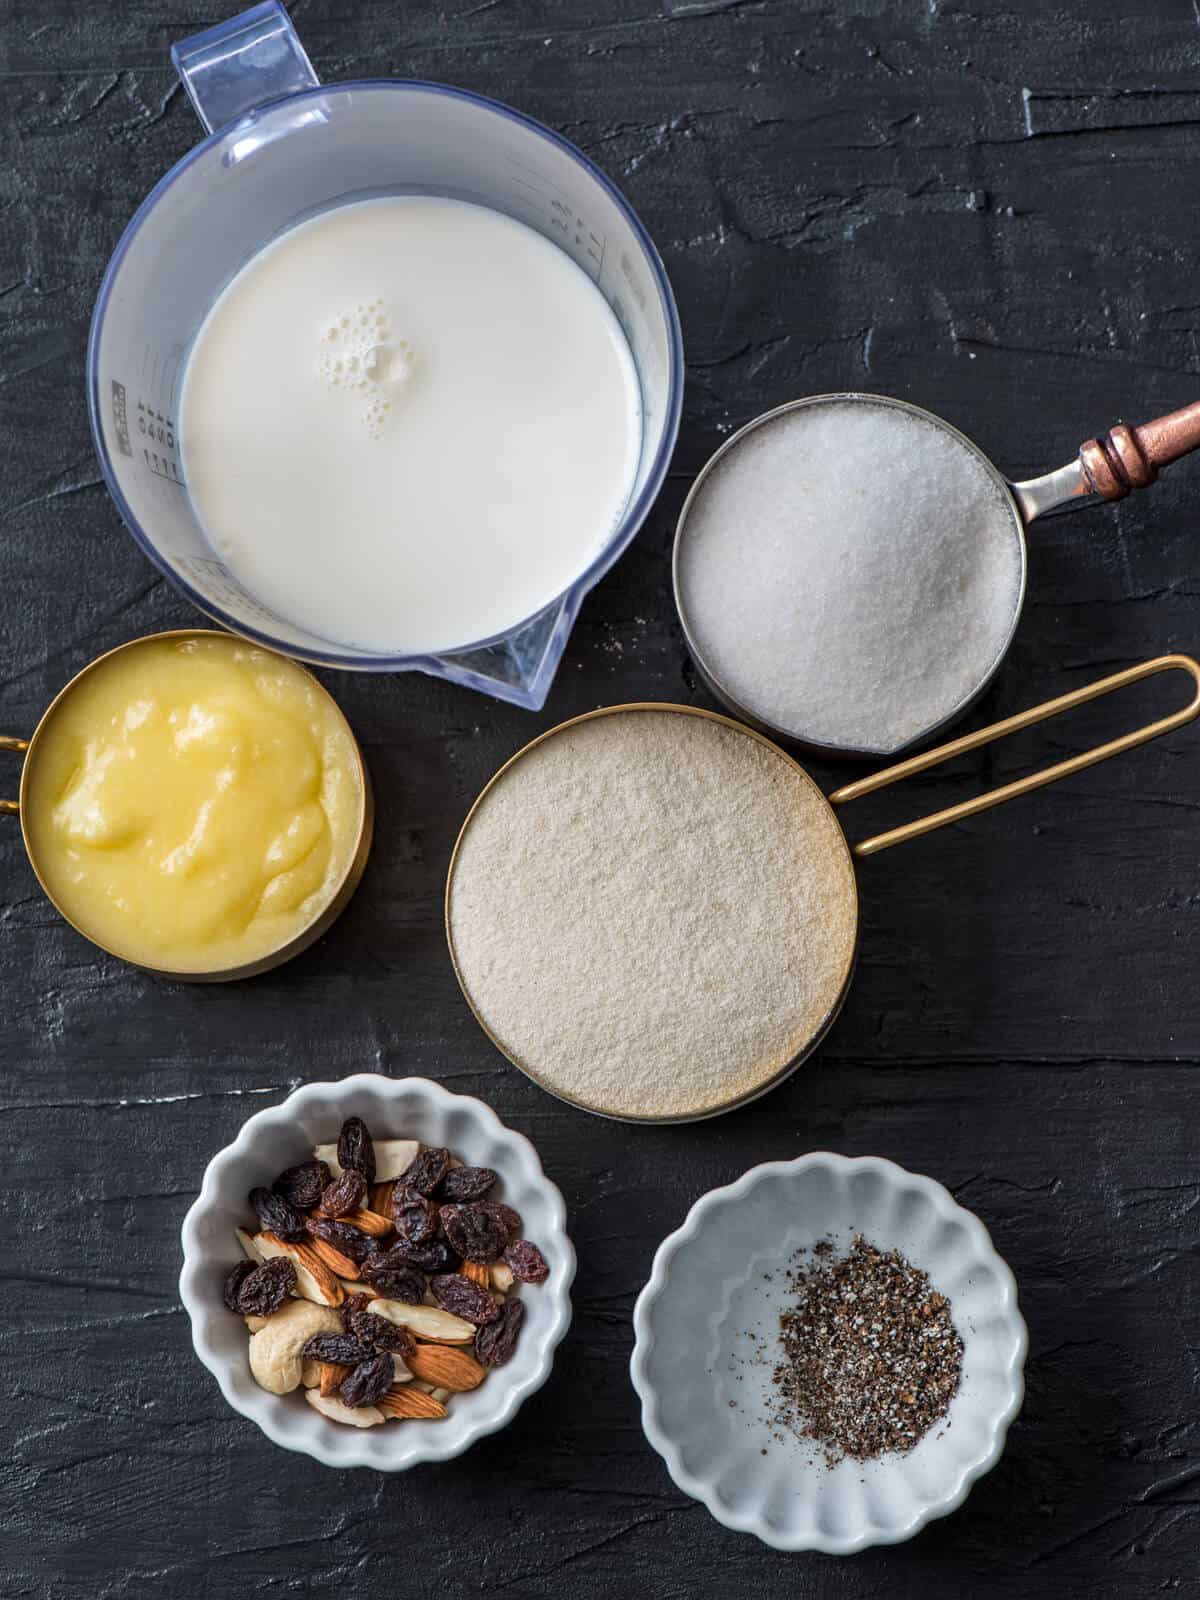 Ingredients for sooji halwa - semolina, cardamom powder, nuts, ghee, sugar and milk